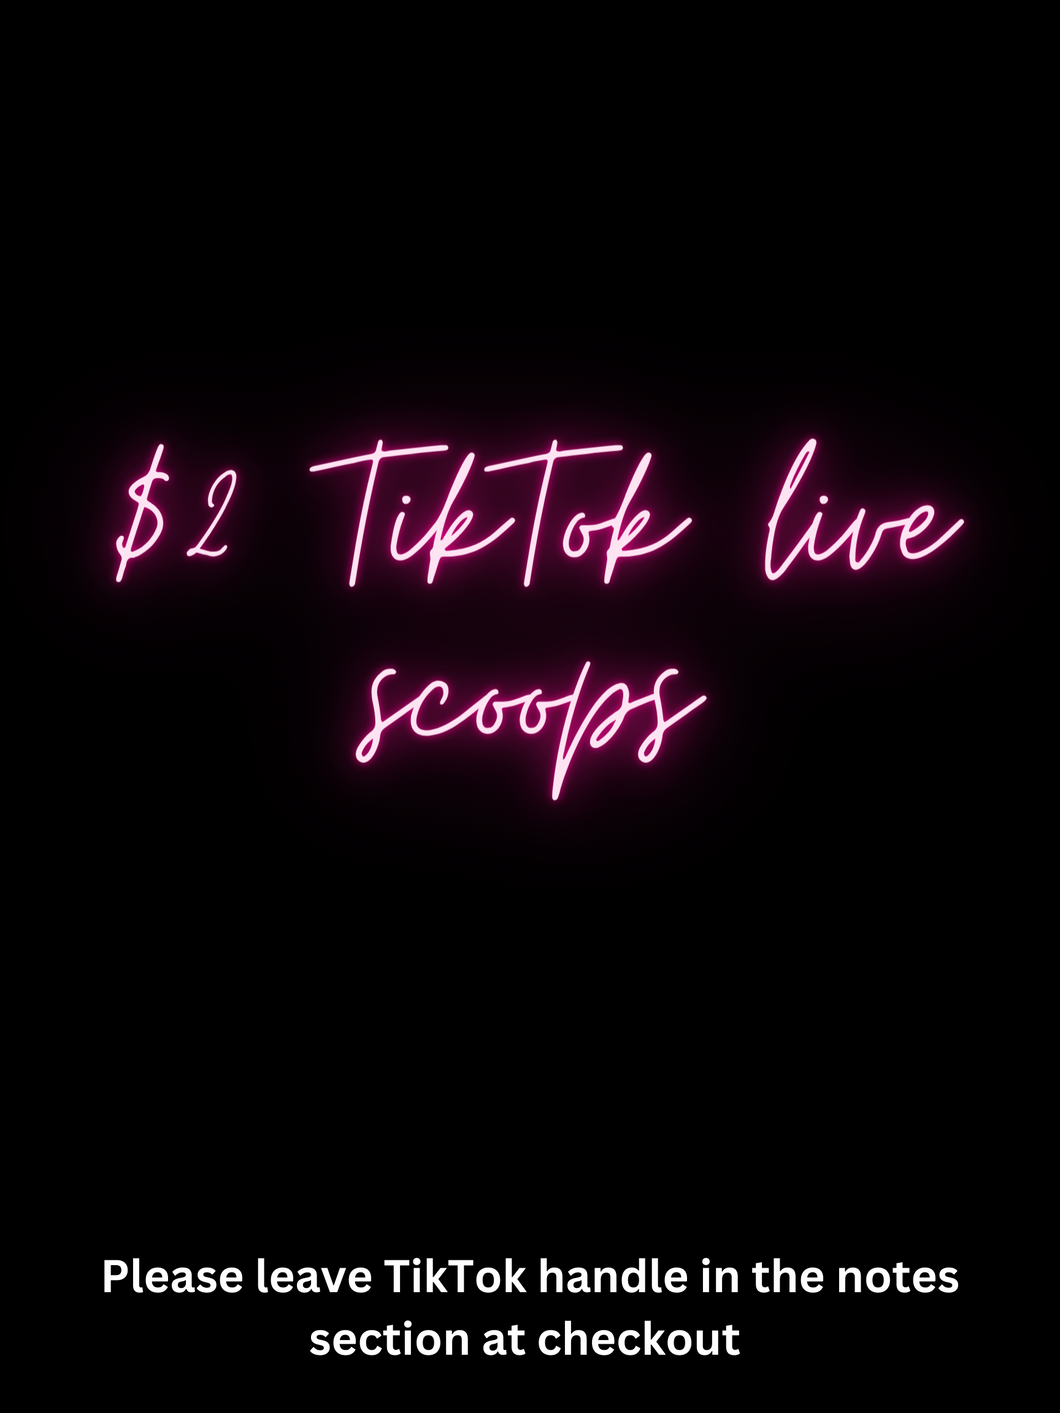 TikTok live scoops